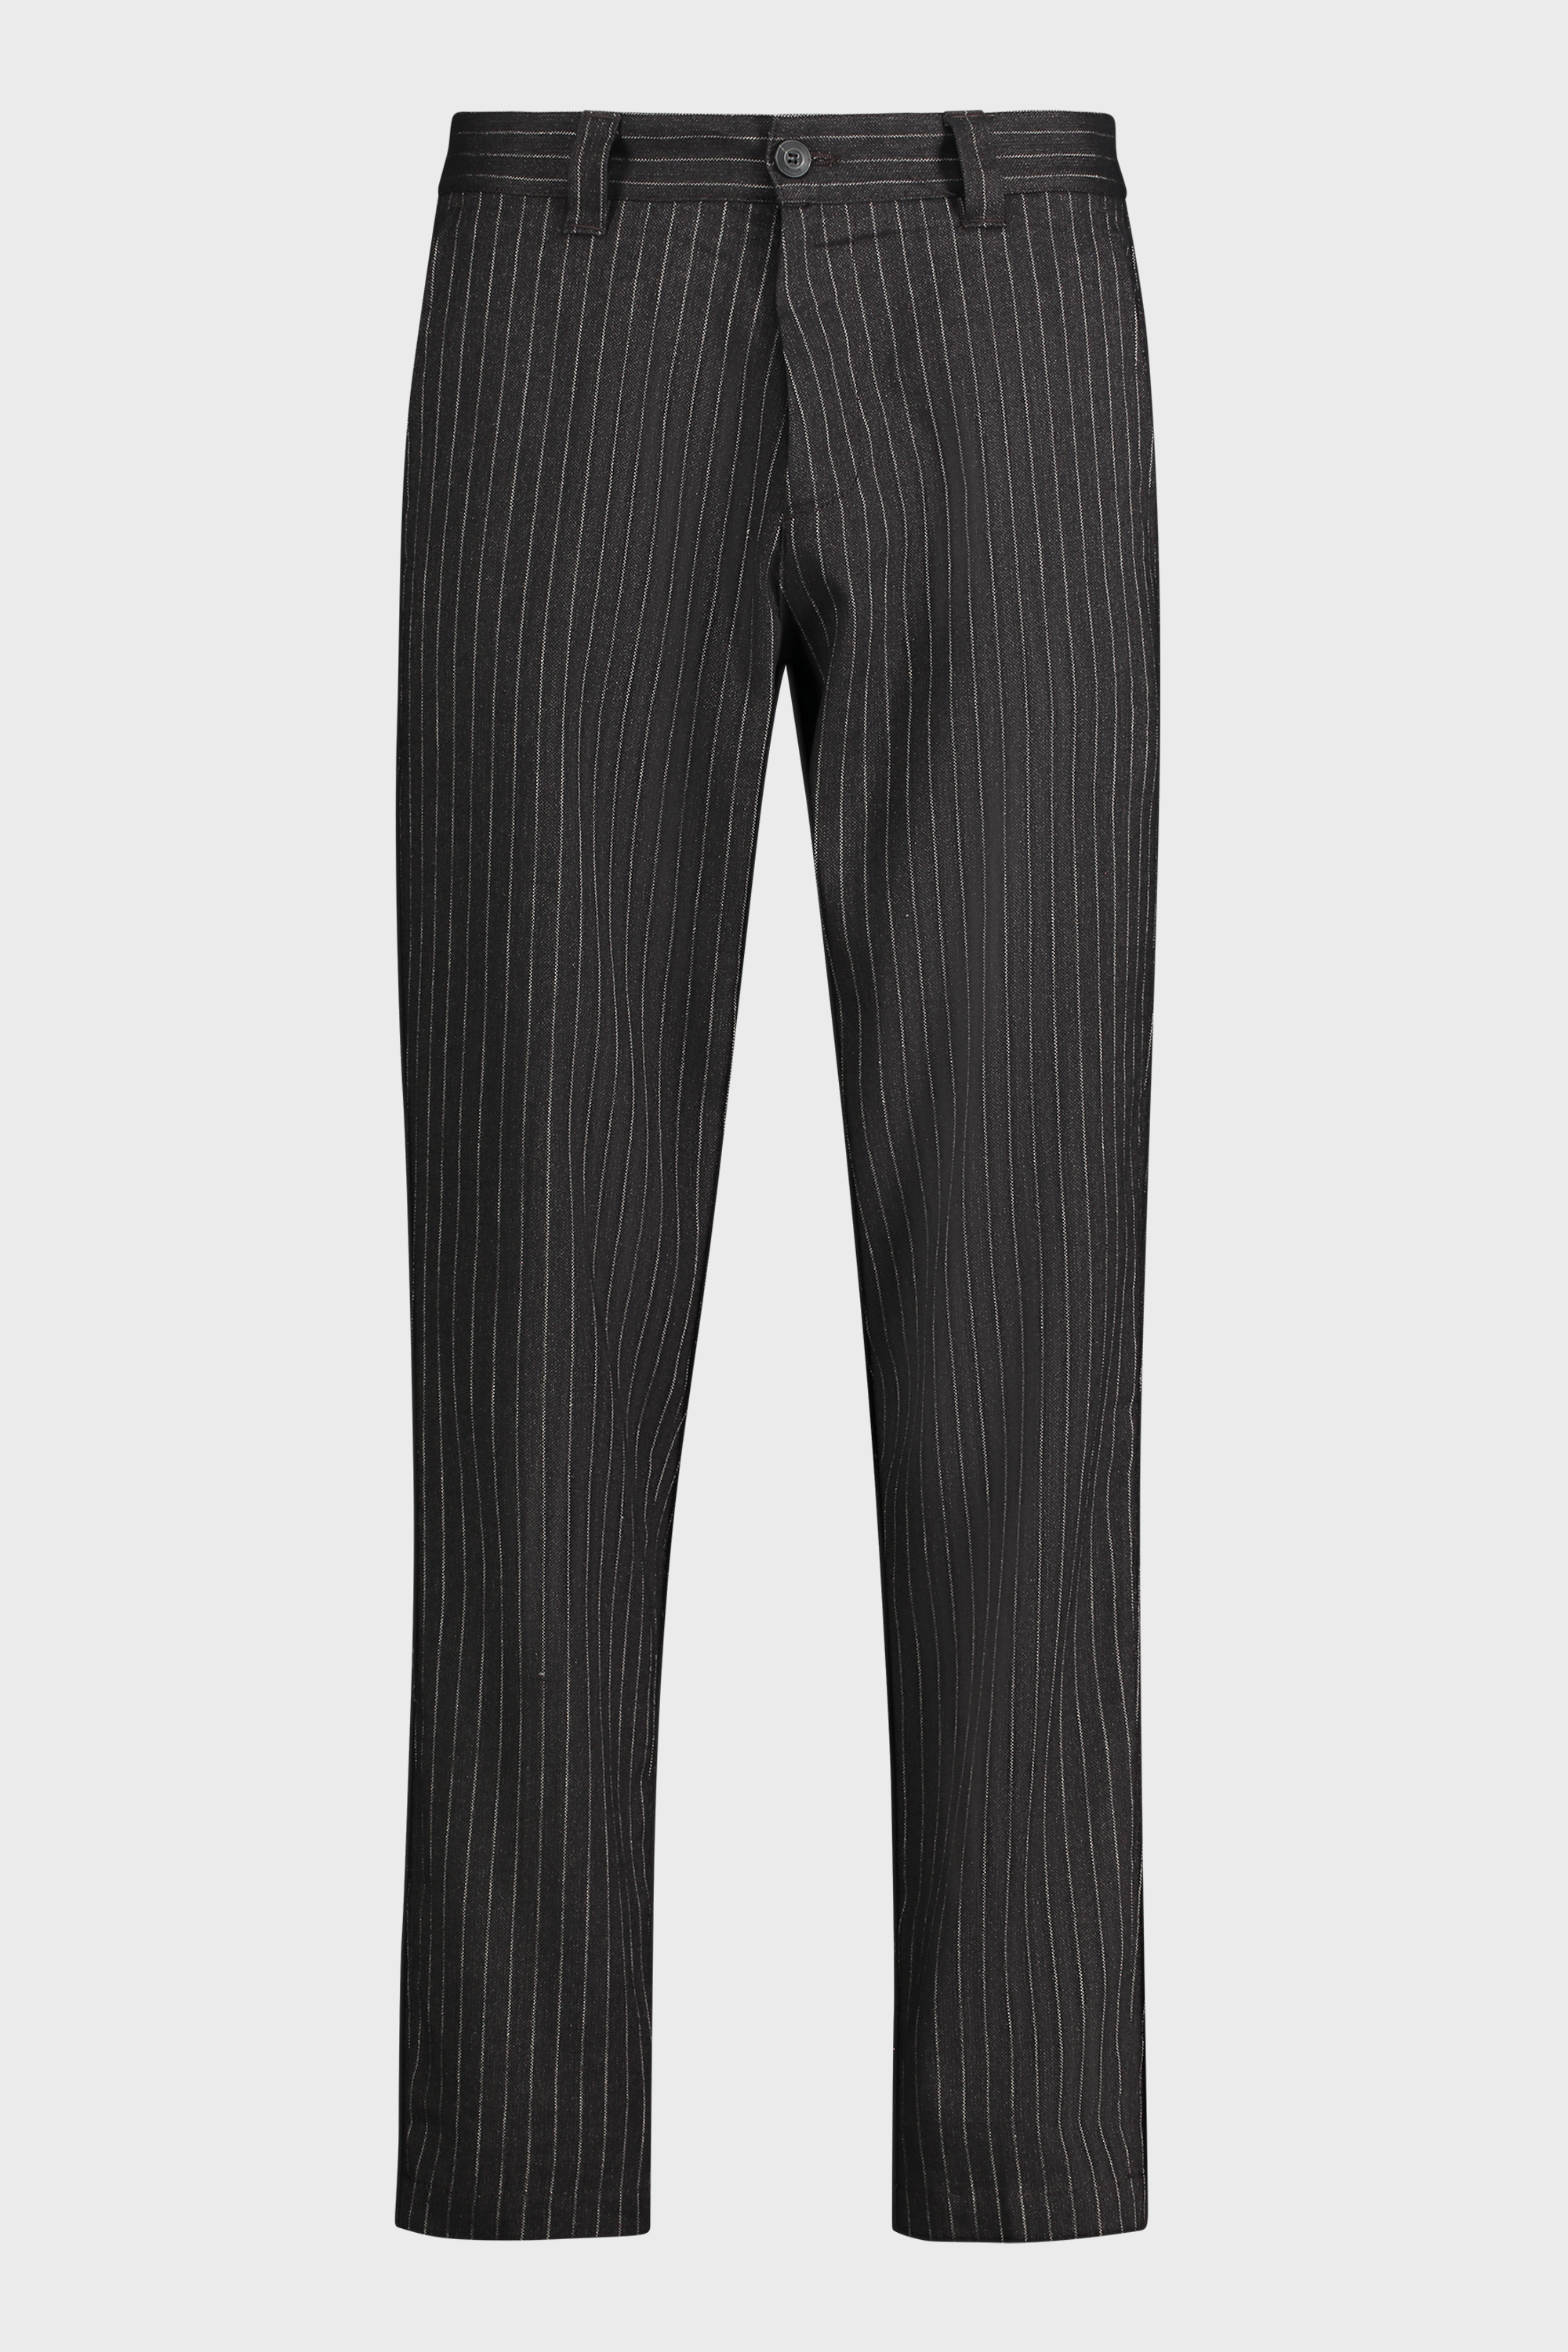 Buy Men Grey Slim Fit Stripe Flat Front Formal Trousers Online - 783644 |  Louis Philippe